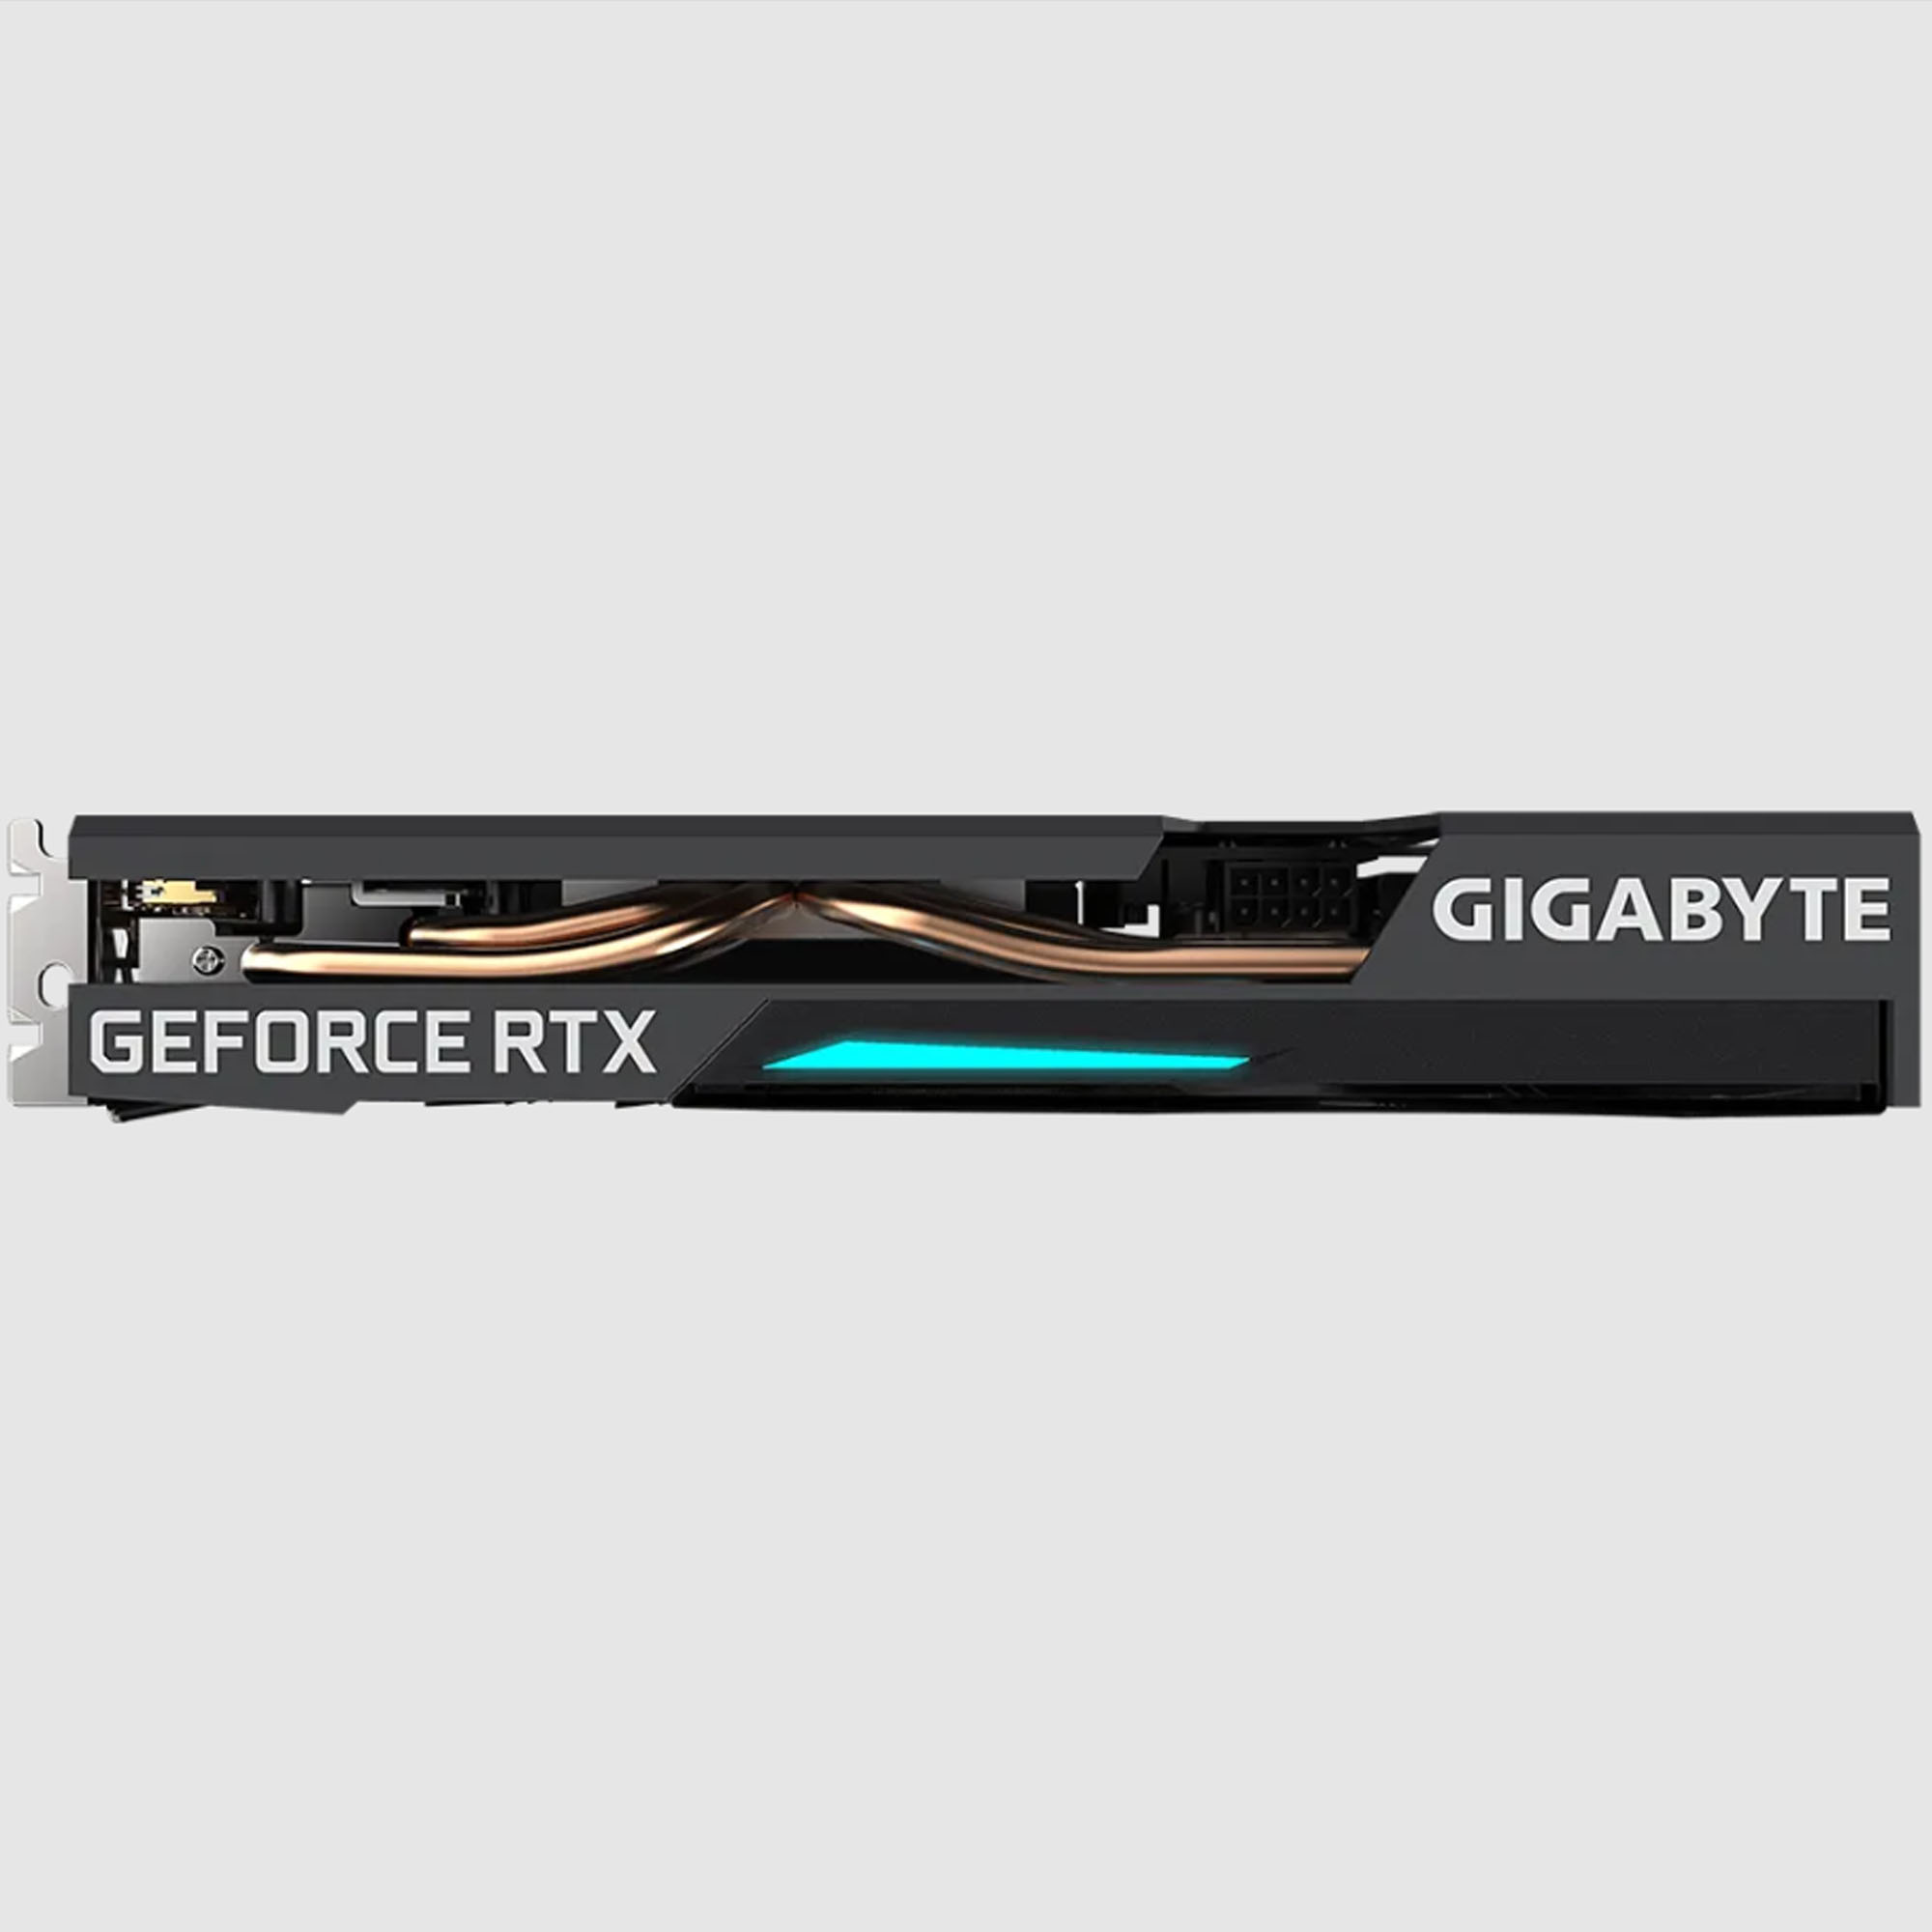 GIGABYTE GEFORCE RTX 3060 EAGLE 12GB GDDR6 GRAPHIC CARD